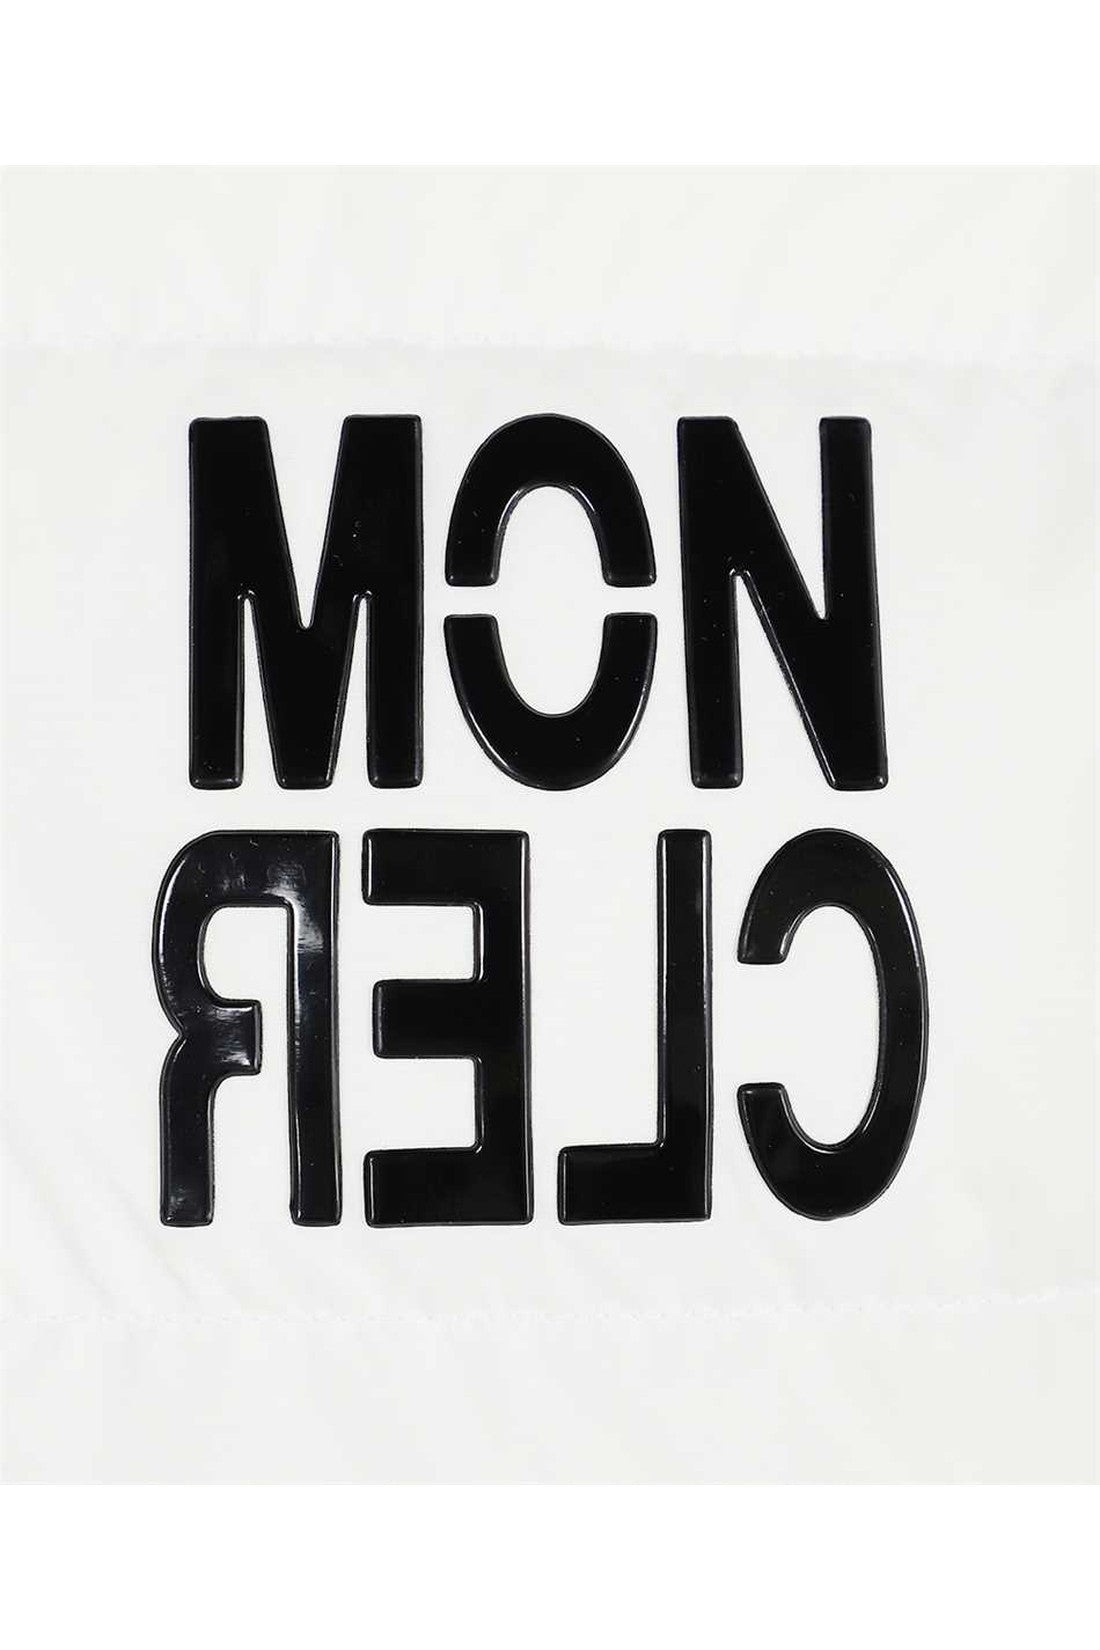 Moncler Grenoble-OUTLET-SALE-Hooded cardigan-ARCHIVIST